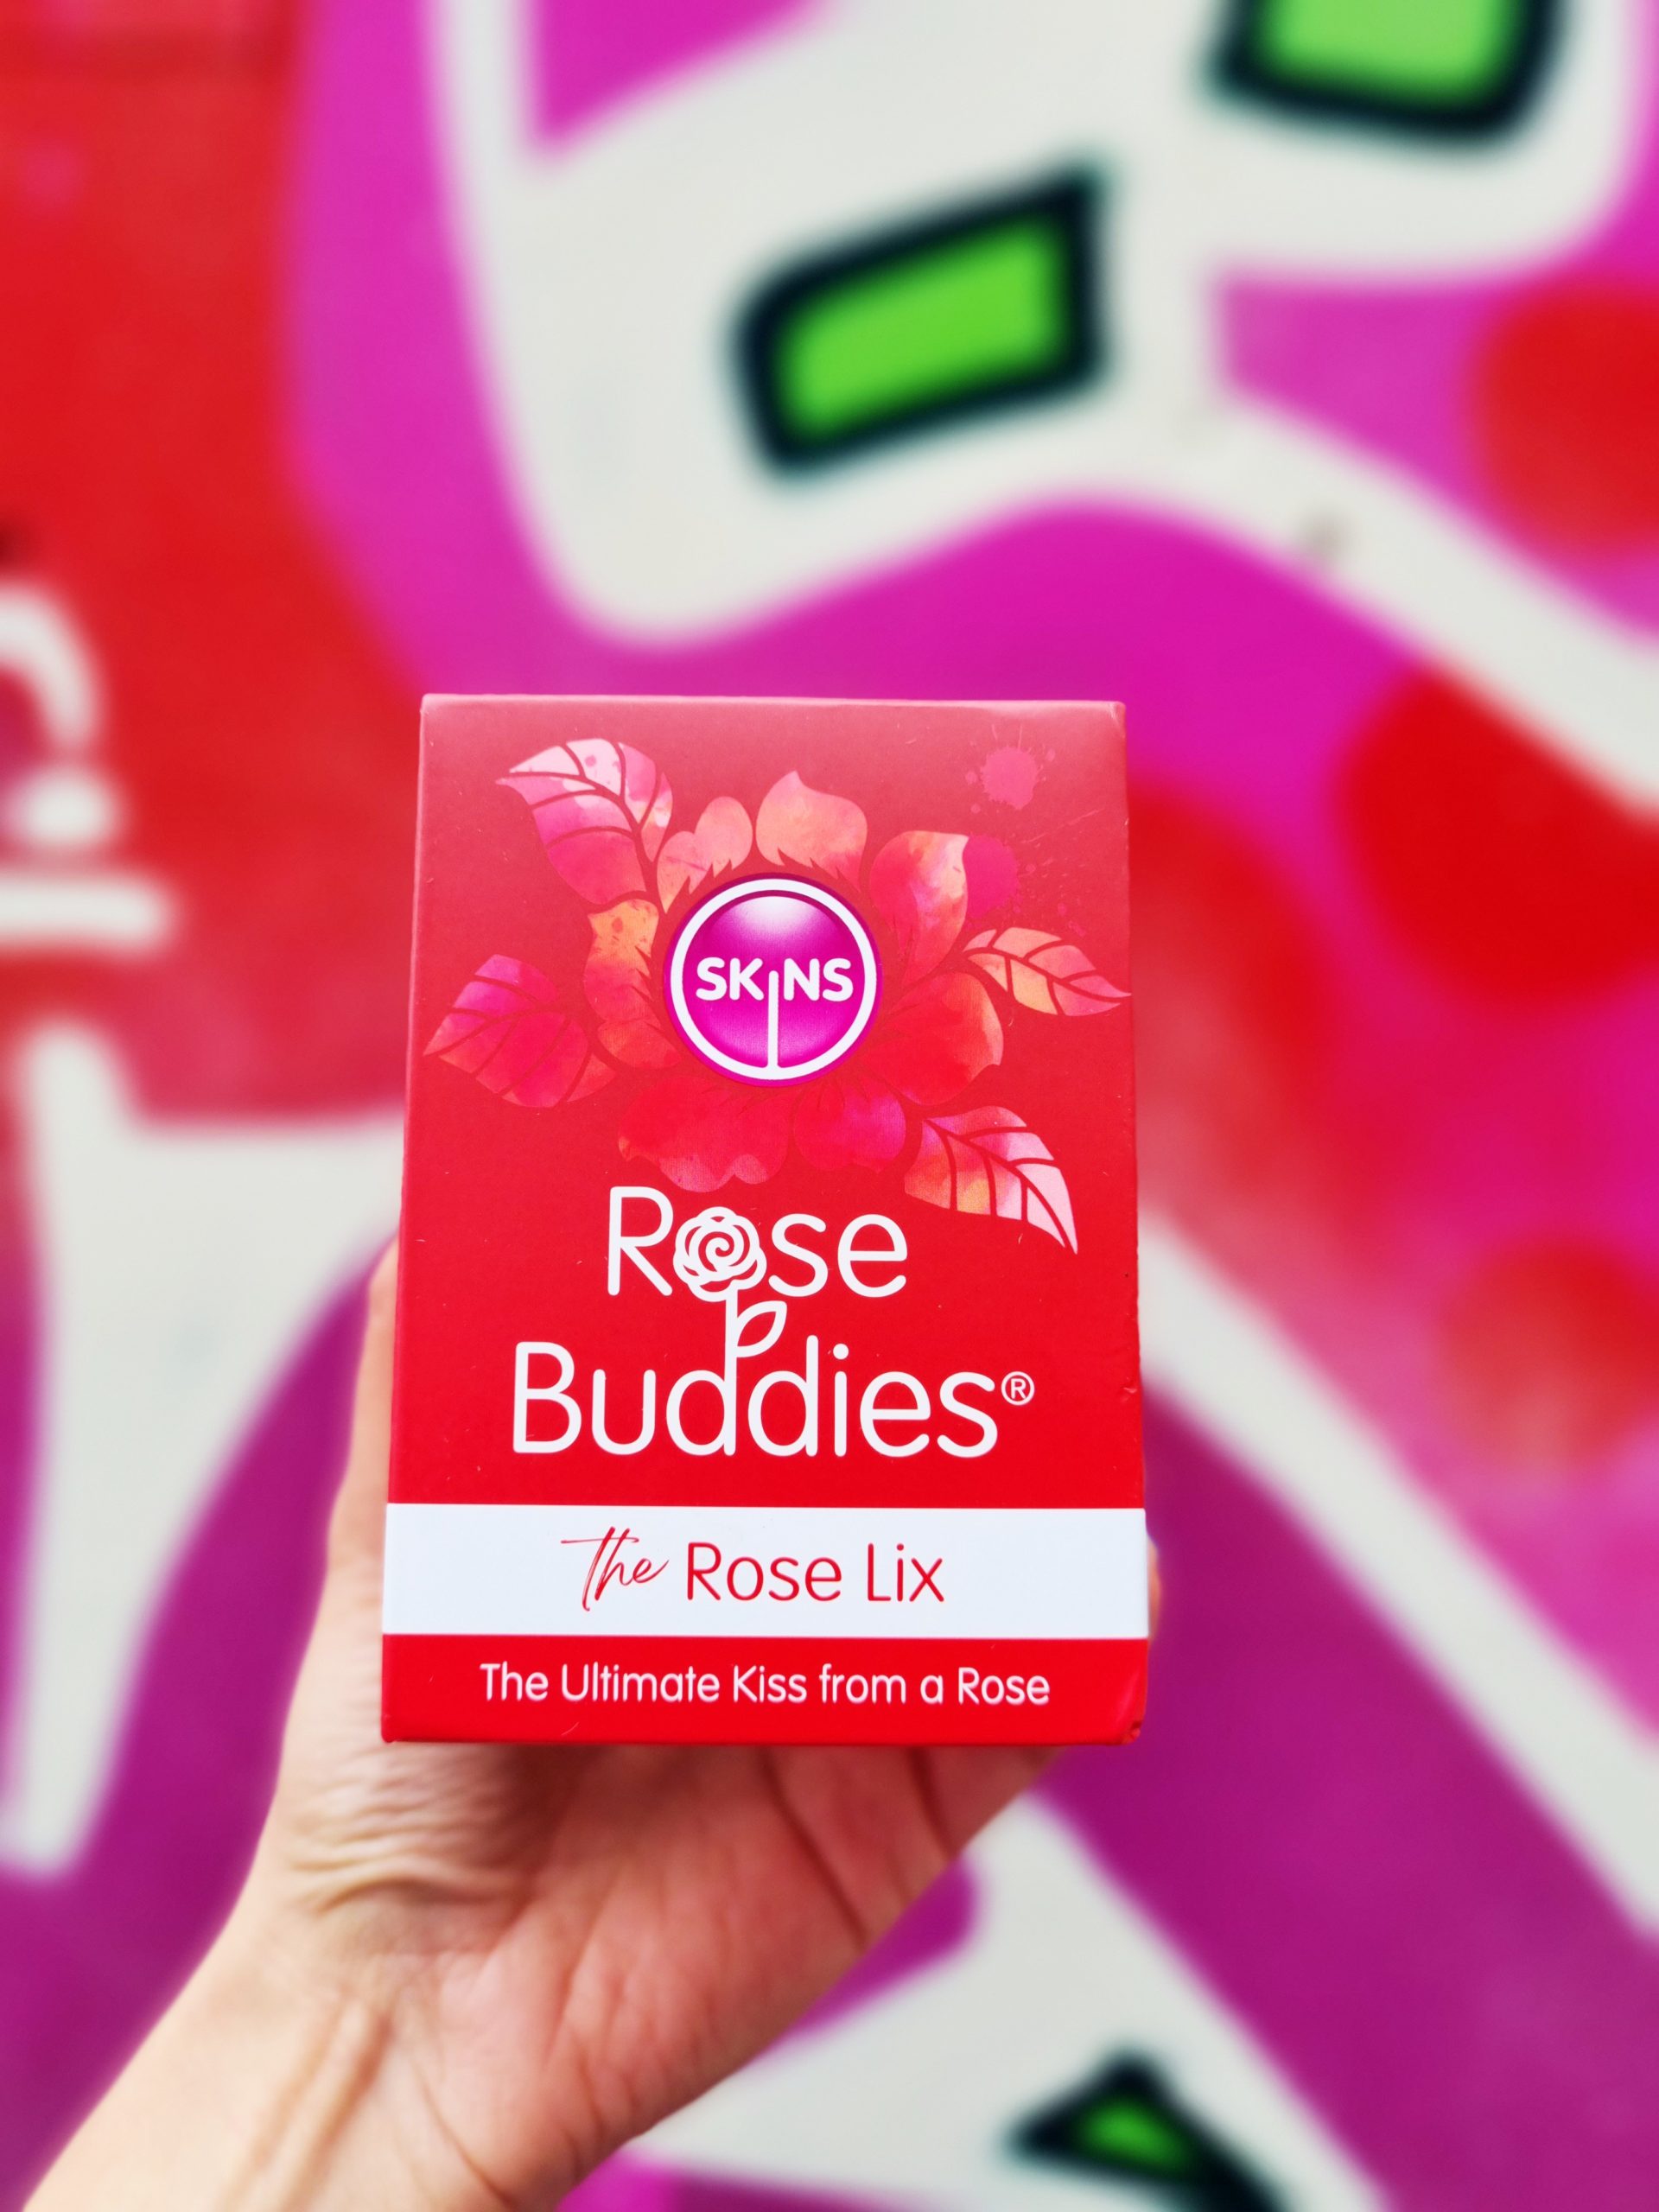 <img src="rose.jpg" alt="rose buddies rose lix toy"/> 